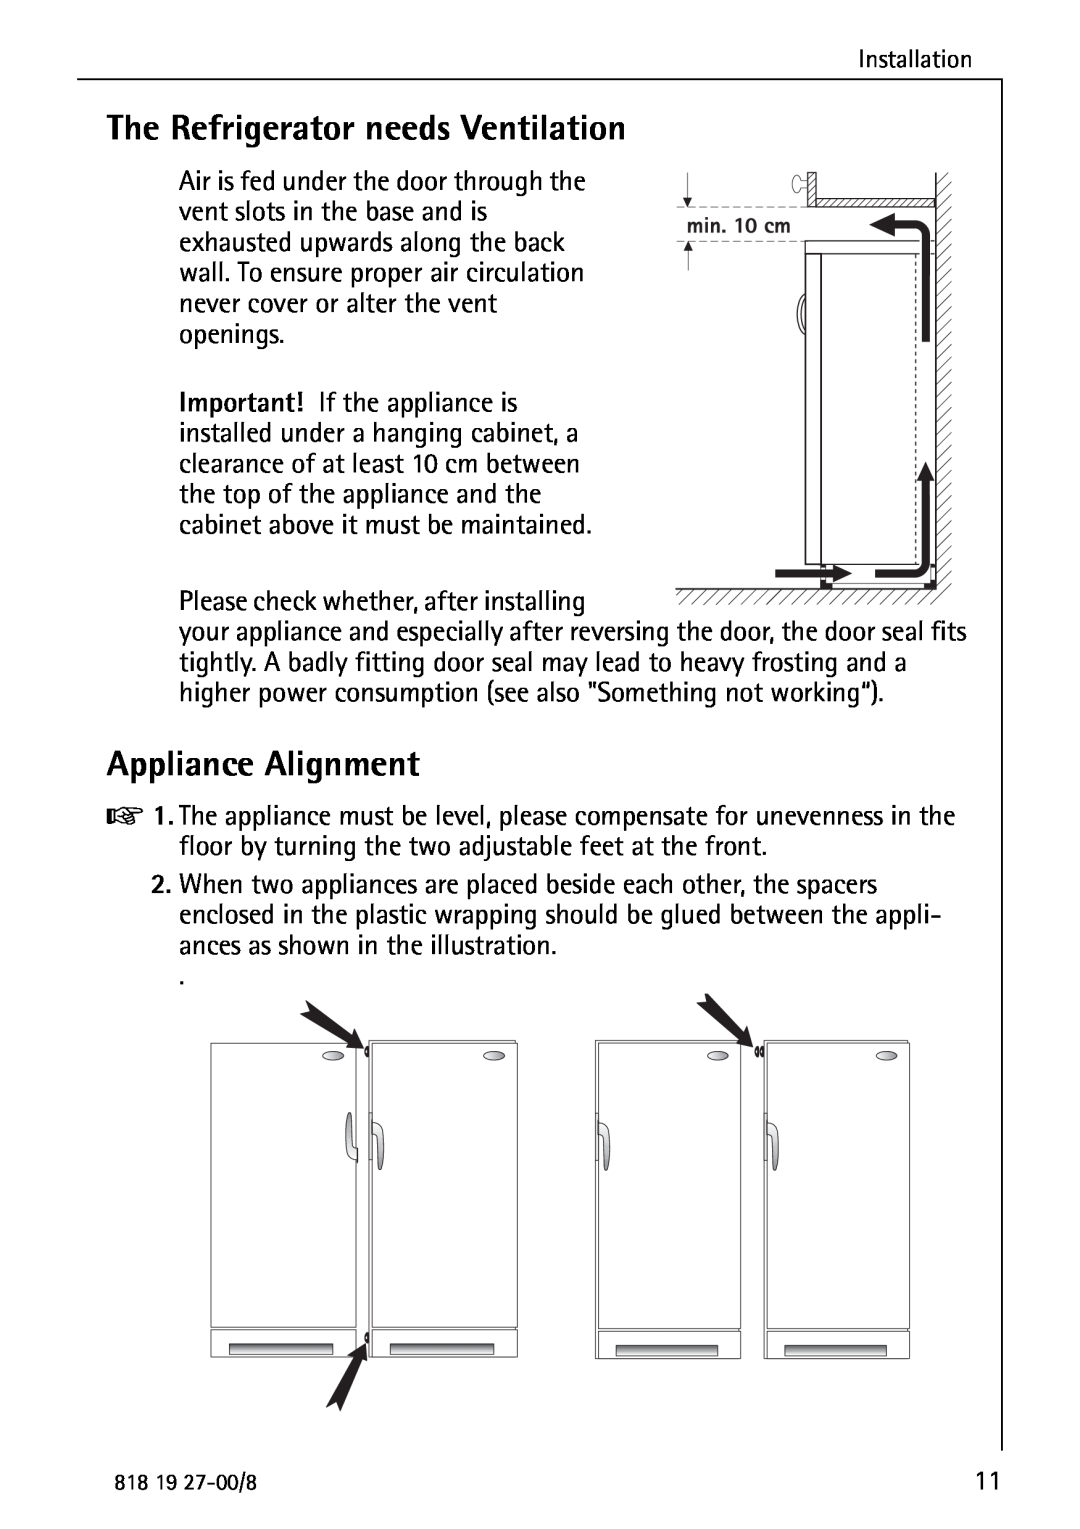 Electrolux Upright Refrigerator manual The Refrigerator needs Ventilation, Appliance Alignment 